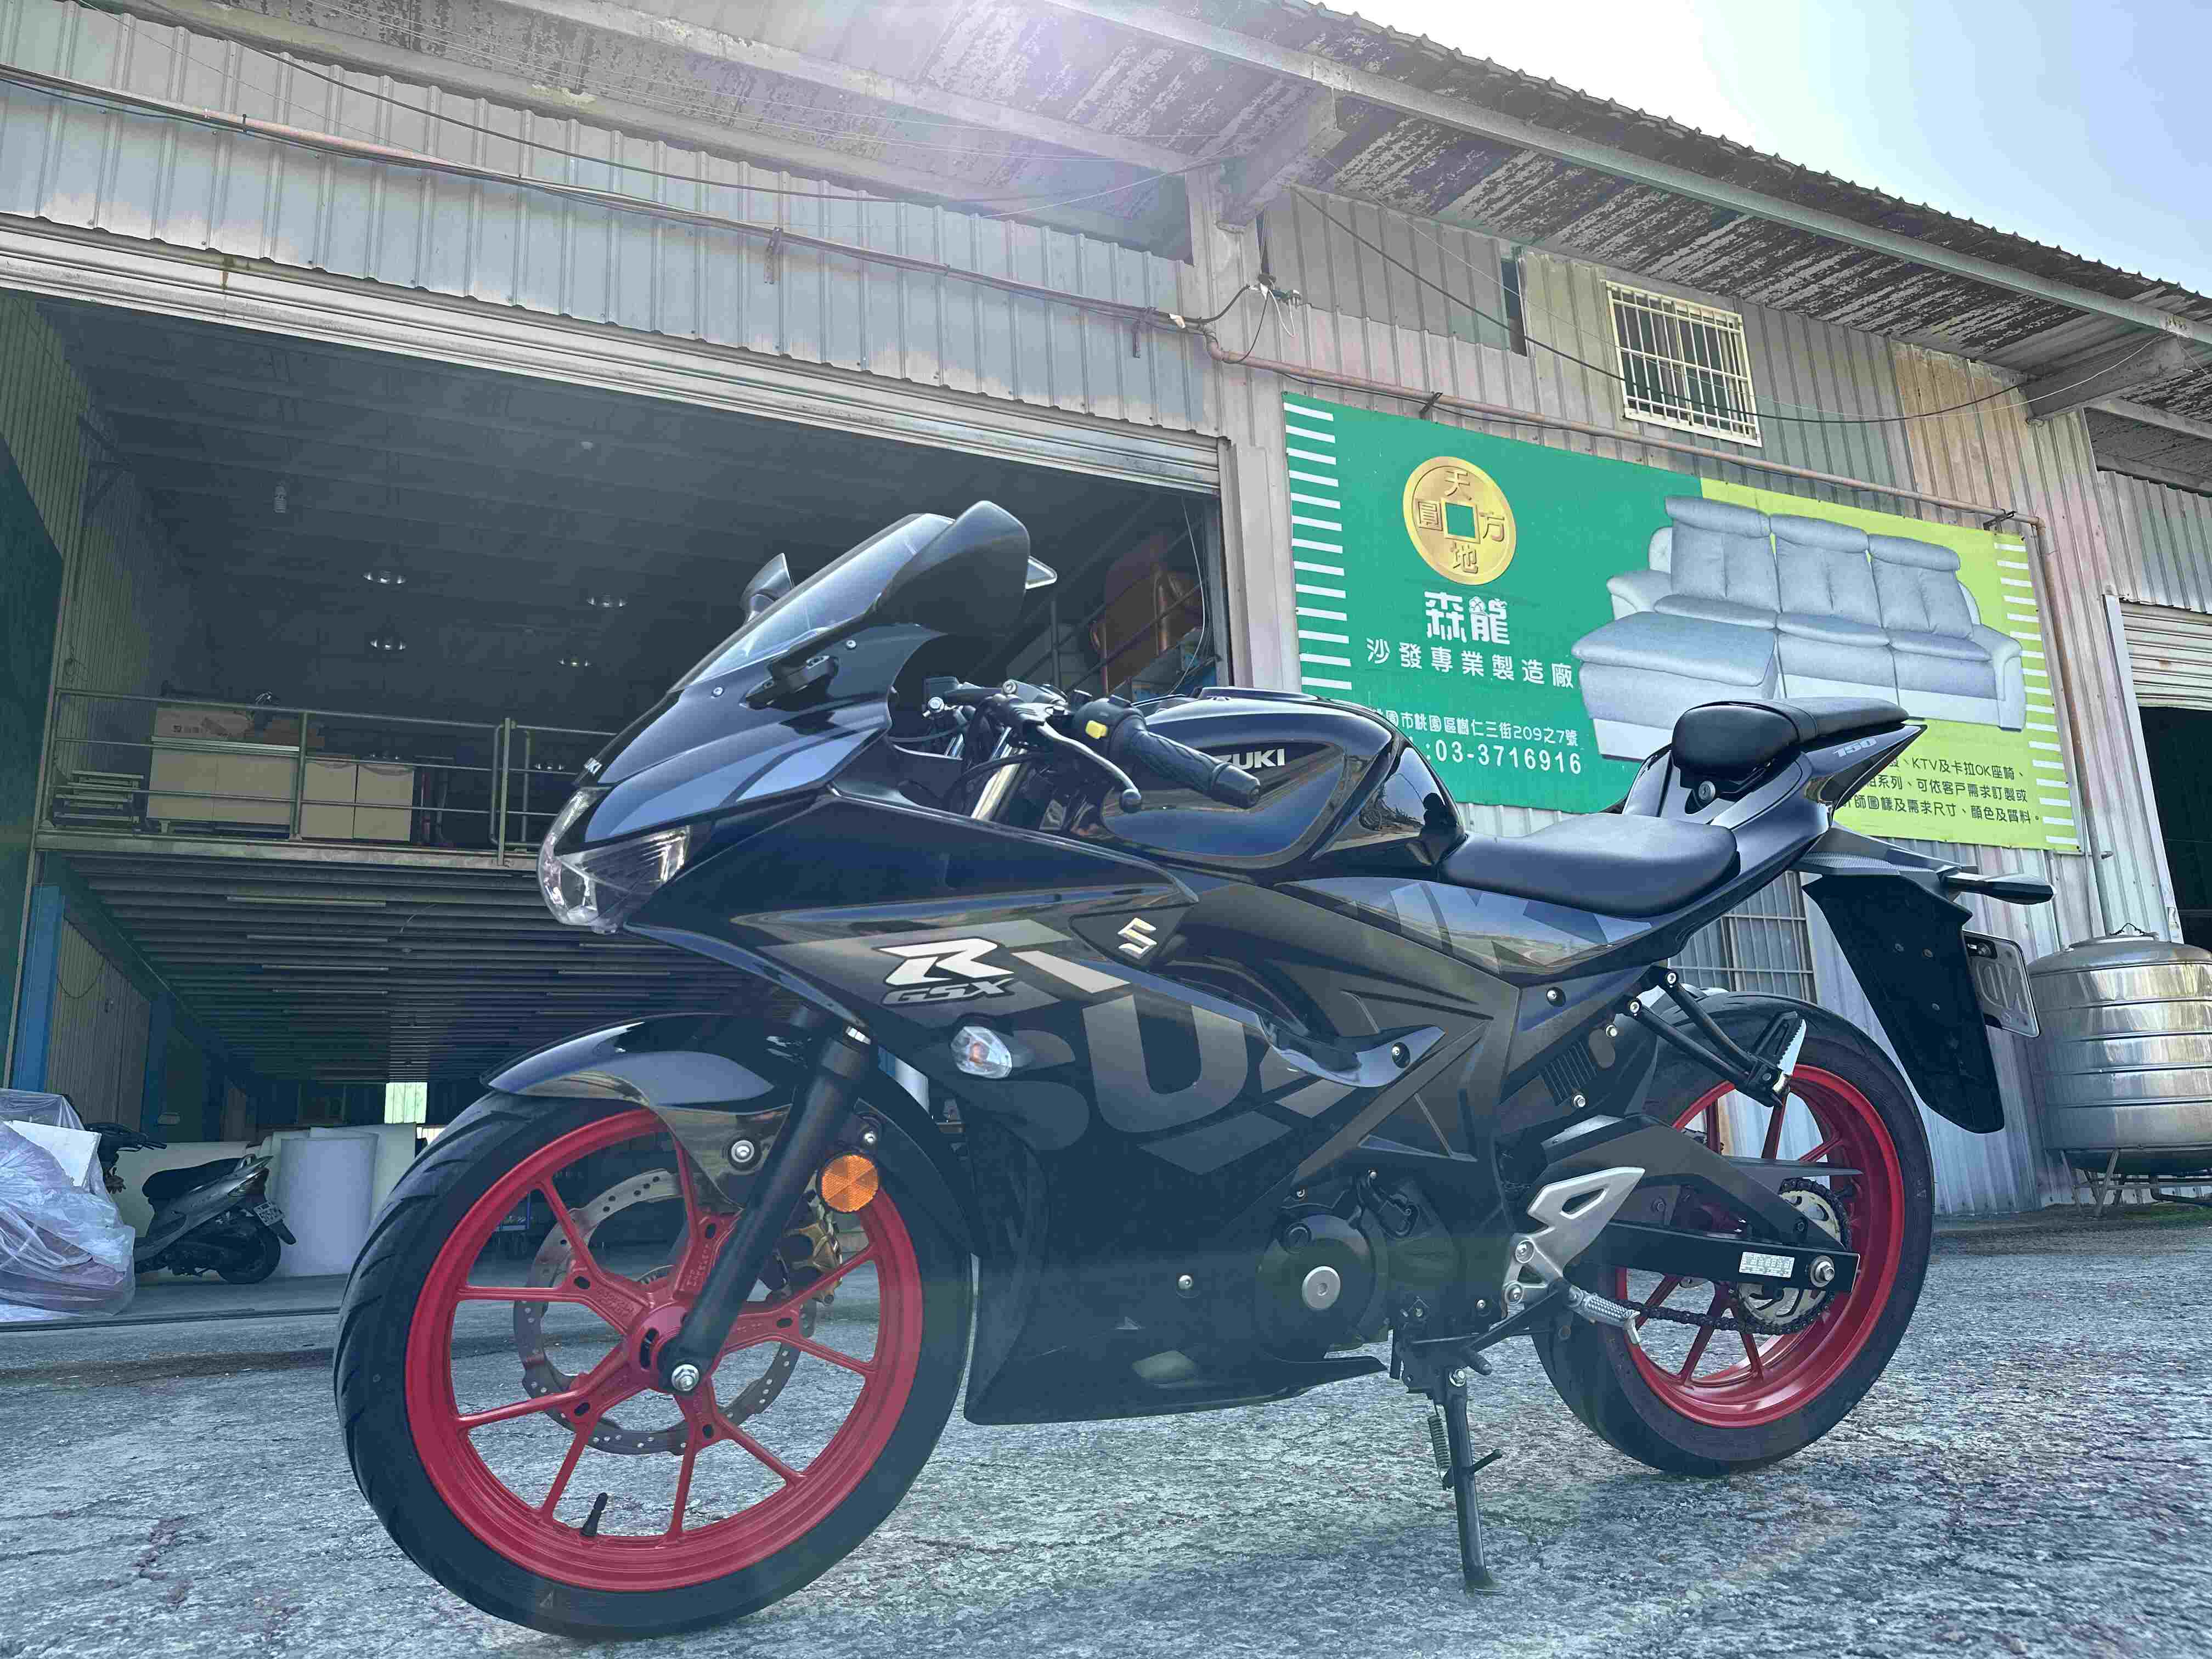 【湯姆重機】SUZUKI GSX-R150 - 「Webike-摩托車市」 湯姆重機 2021 Suzuki Gsx-R150